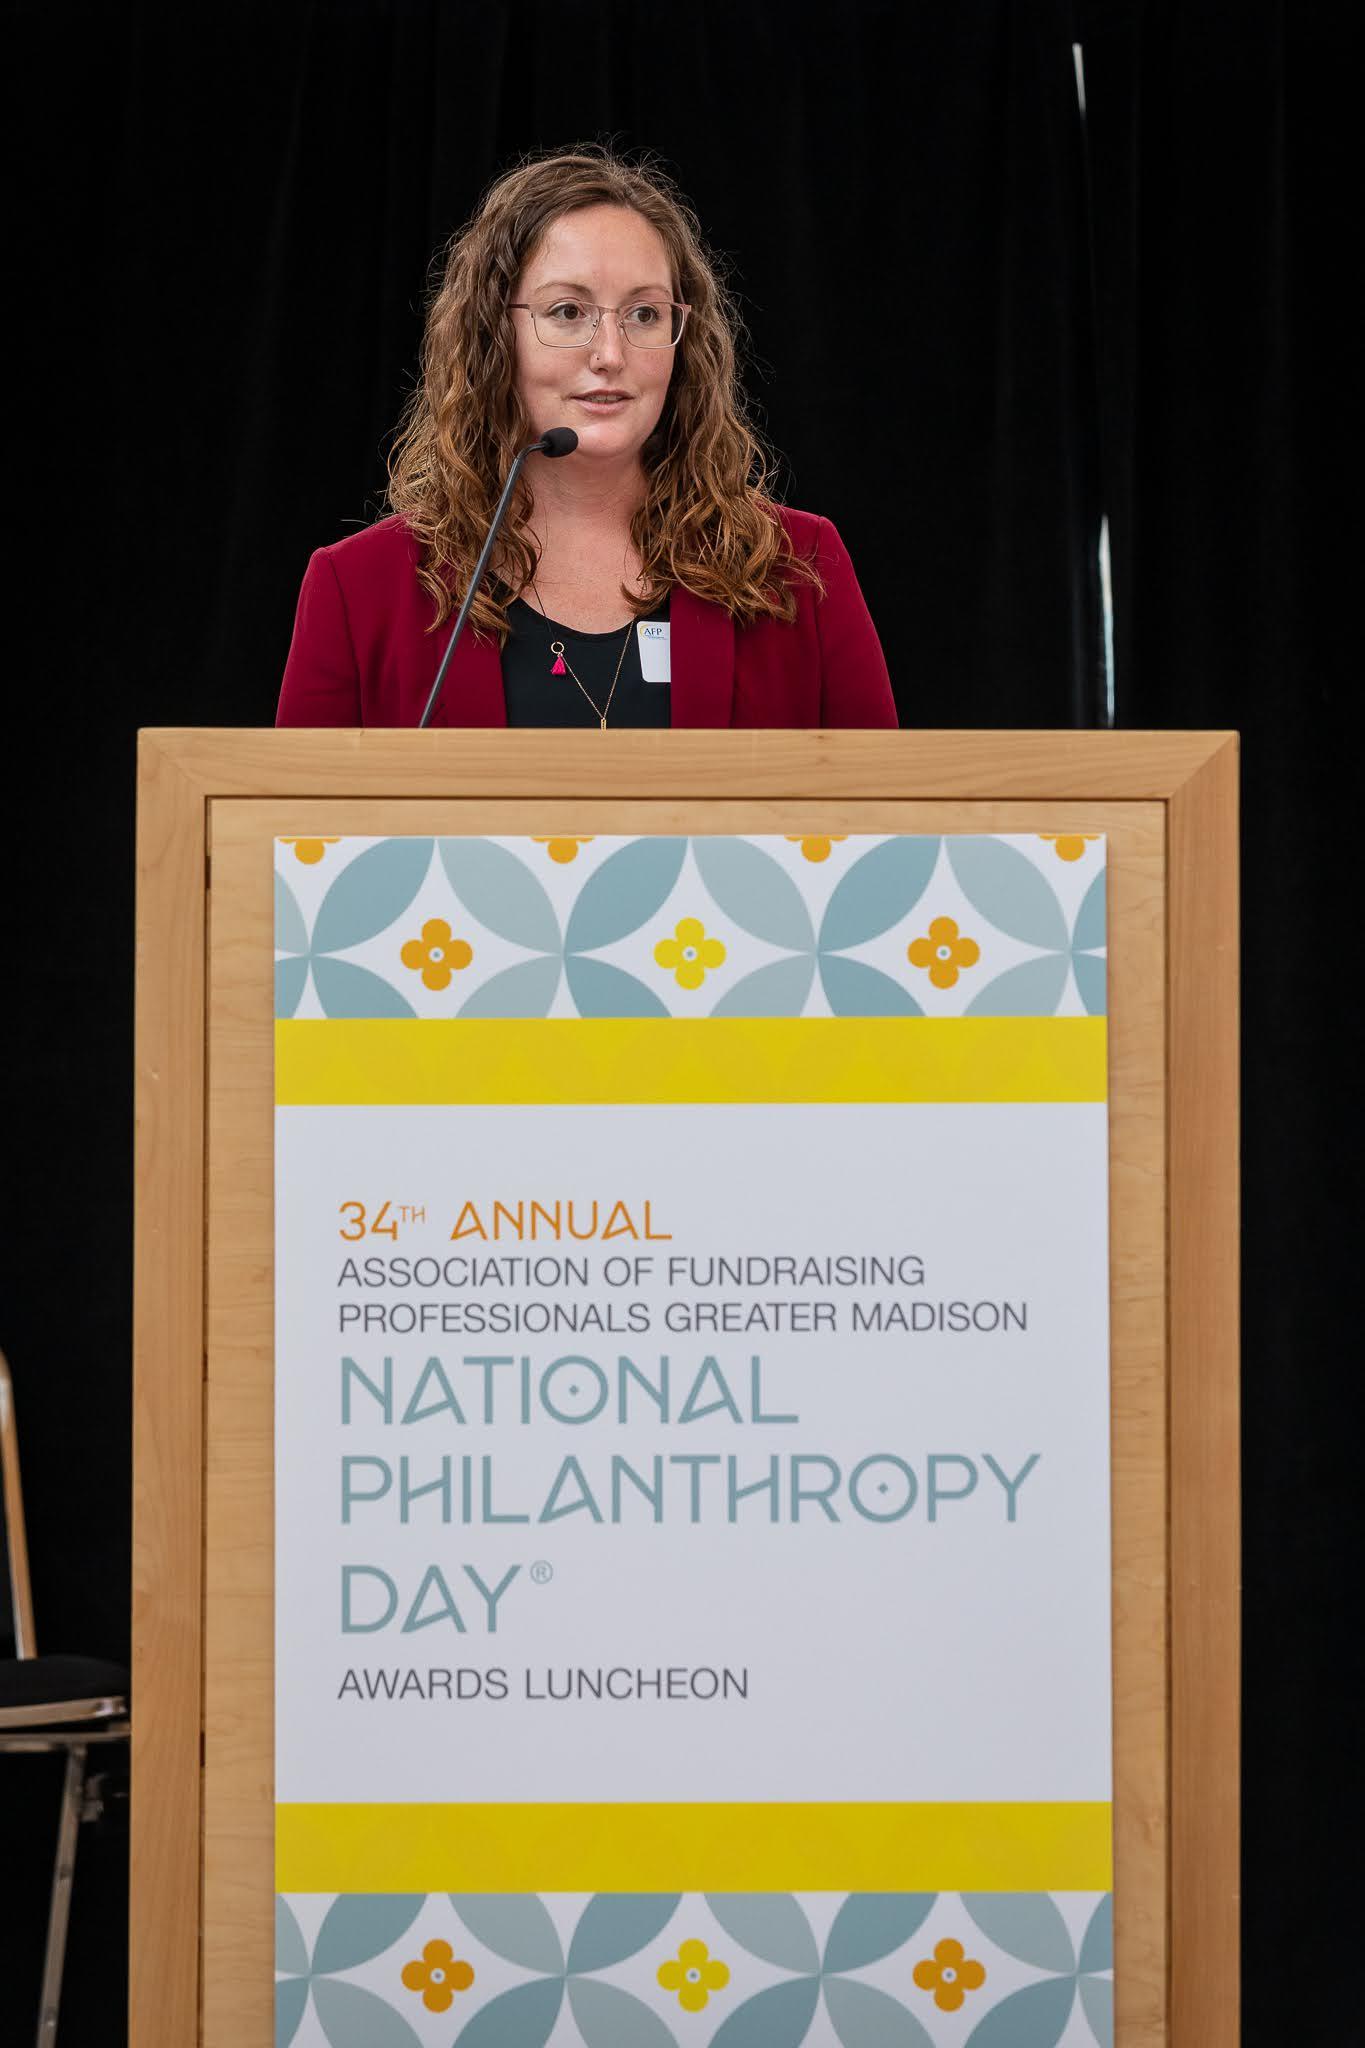 National Philanthropy Day 2021